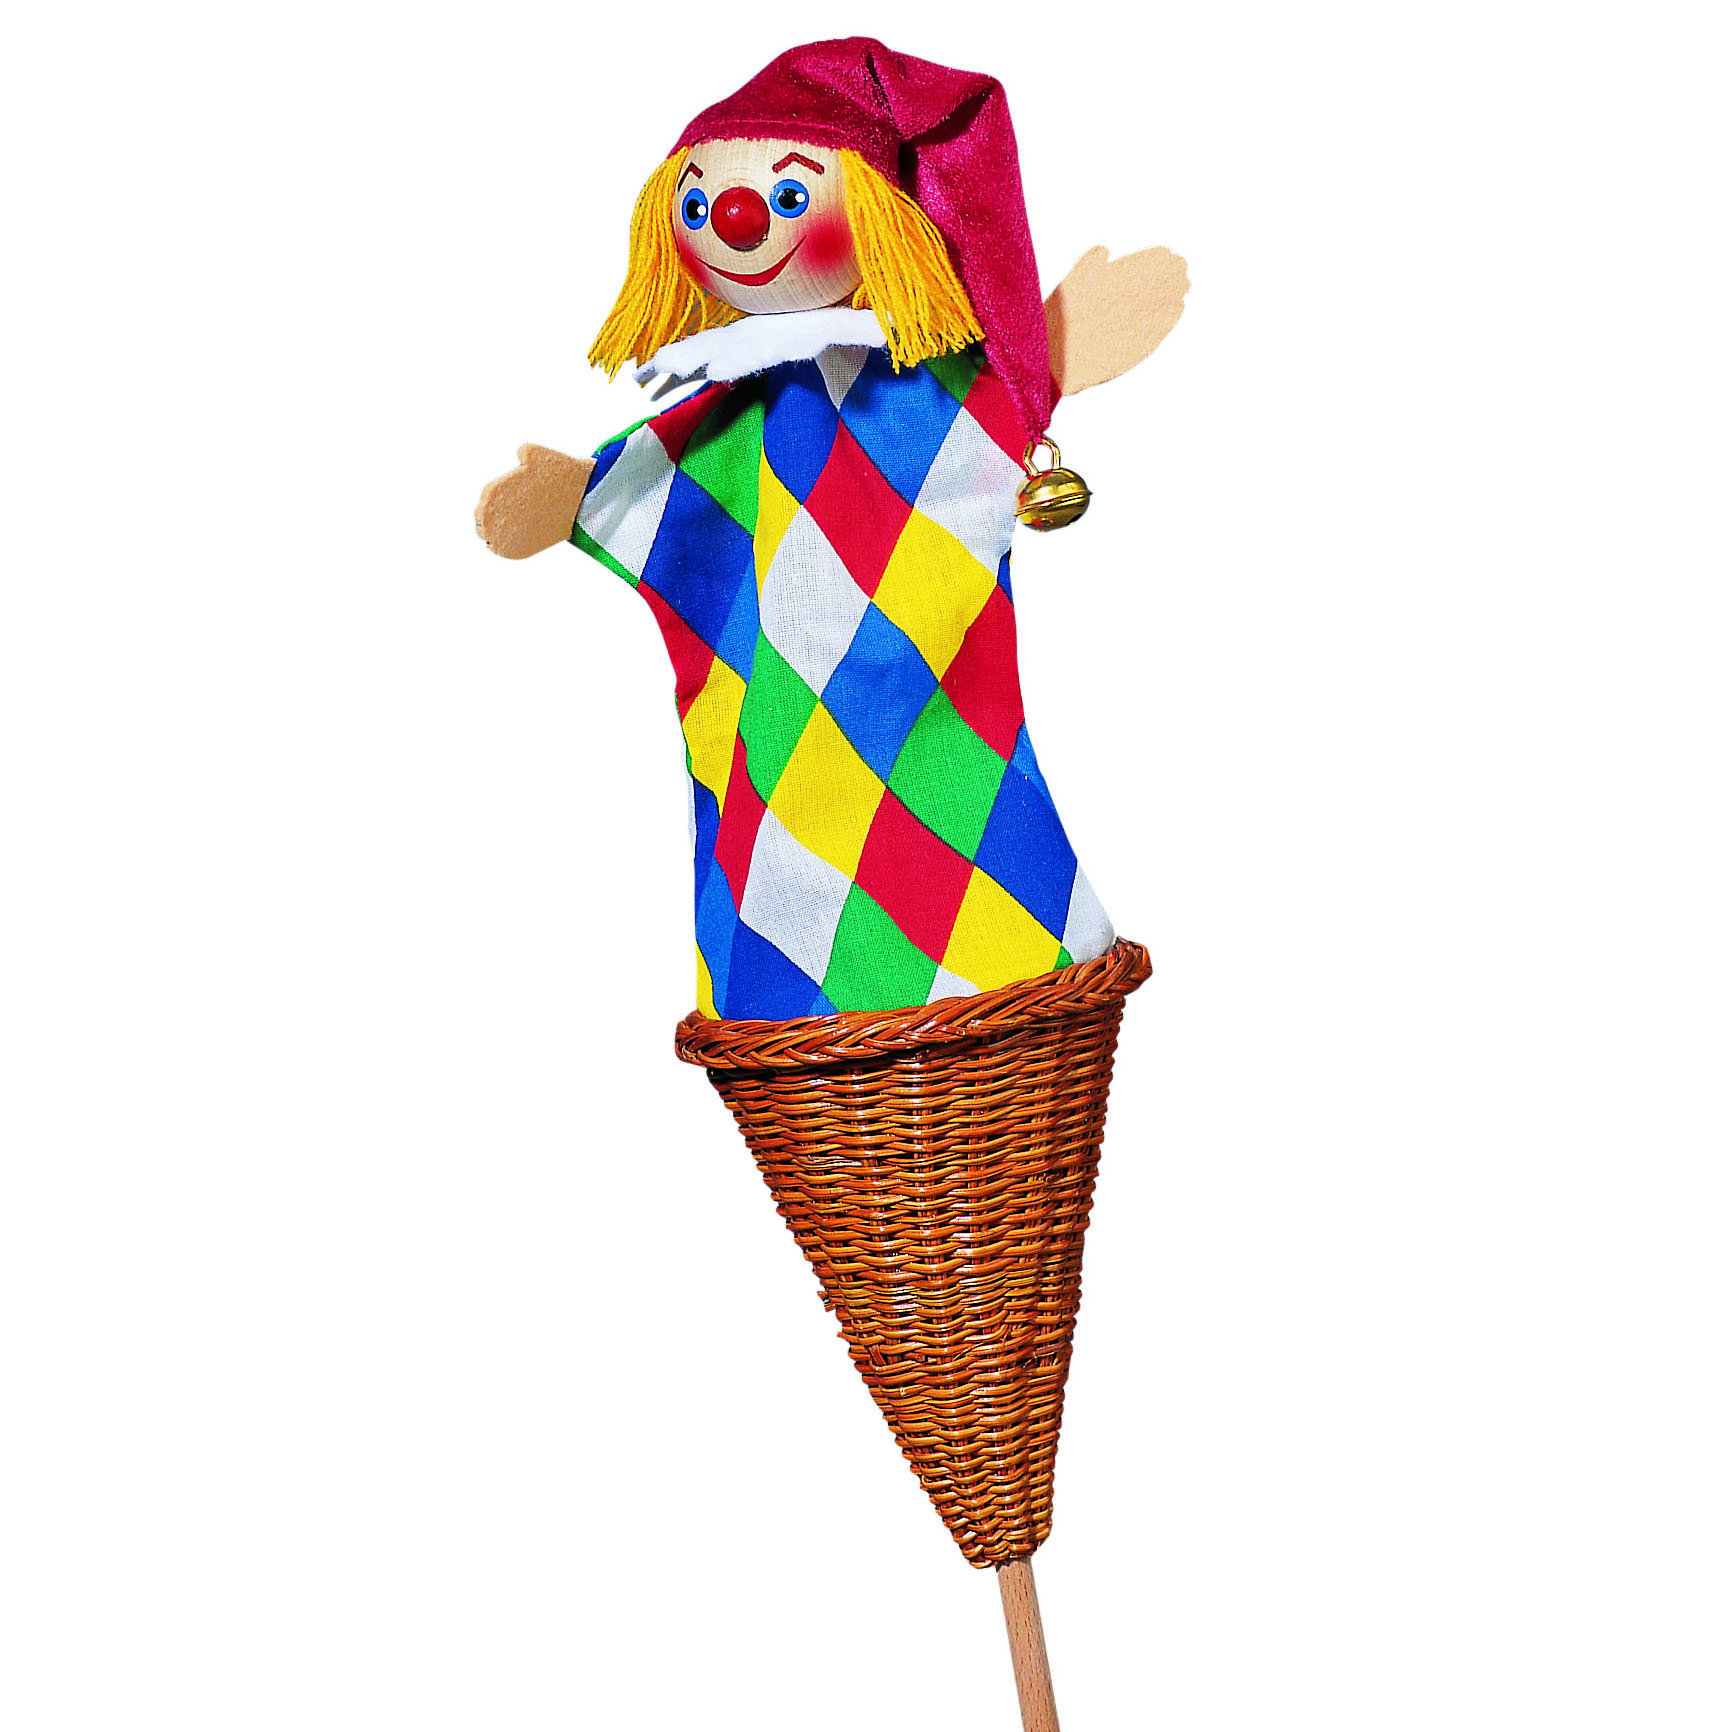 Punch - Korbi - pop-up puppet by KERSA